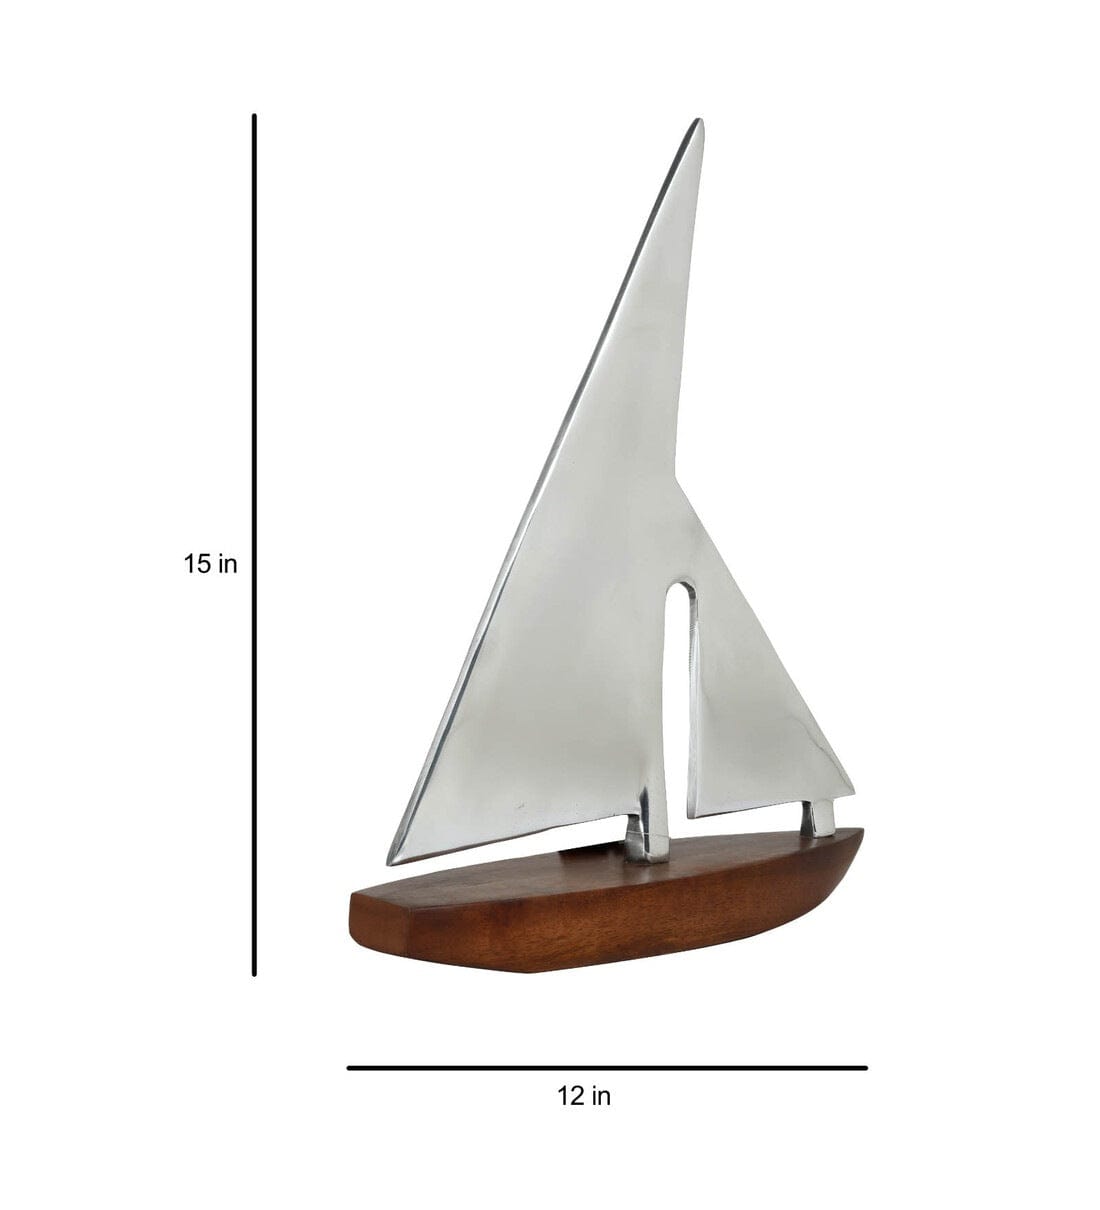 The Sail Boat Hm Wood Showpiece,